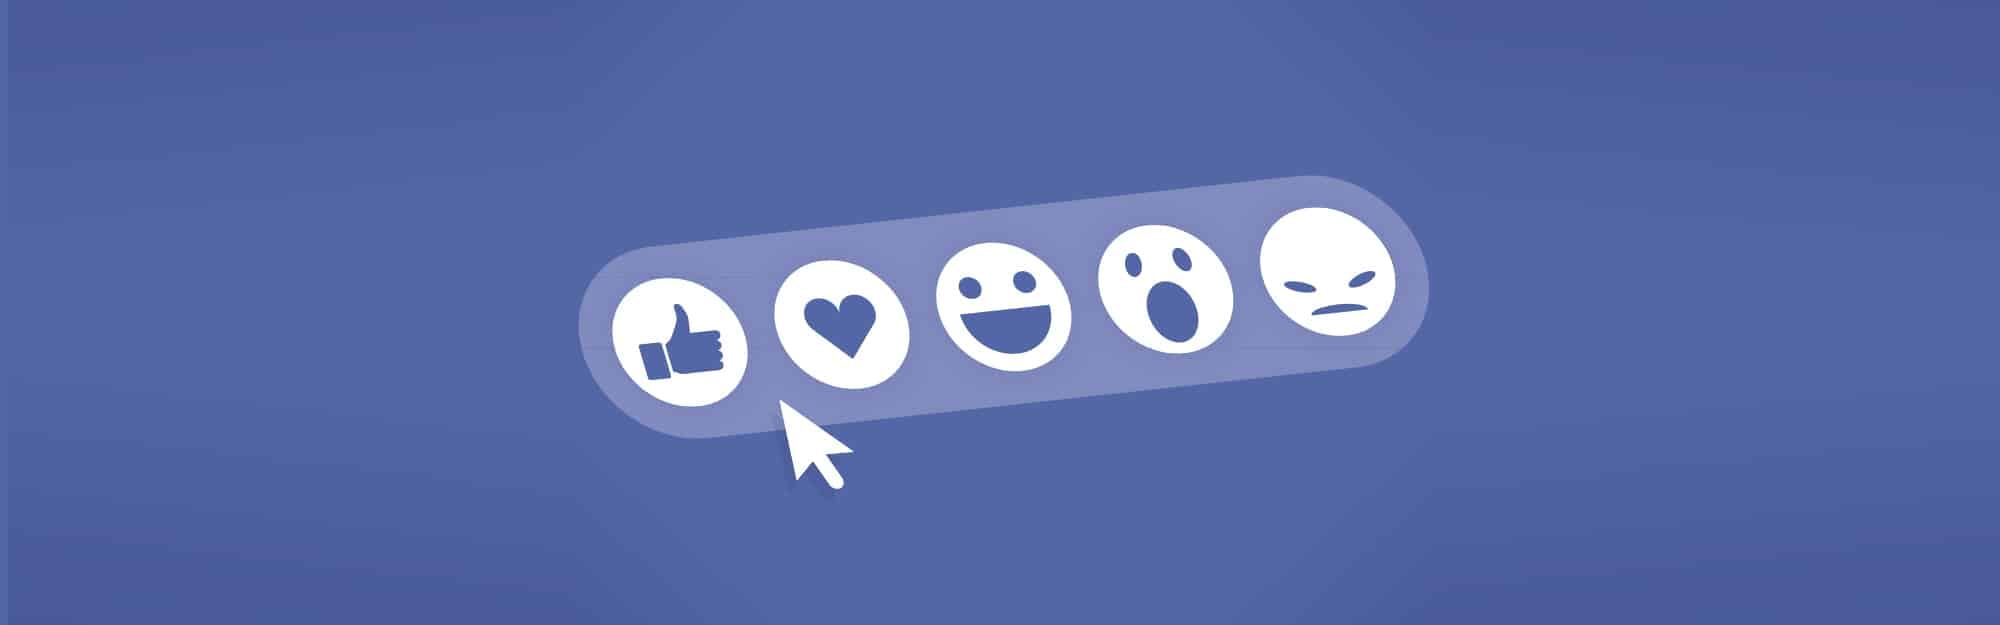 Reaction social media monitoring Facebook shares